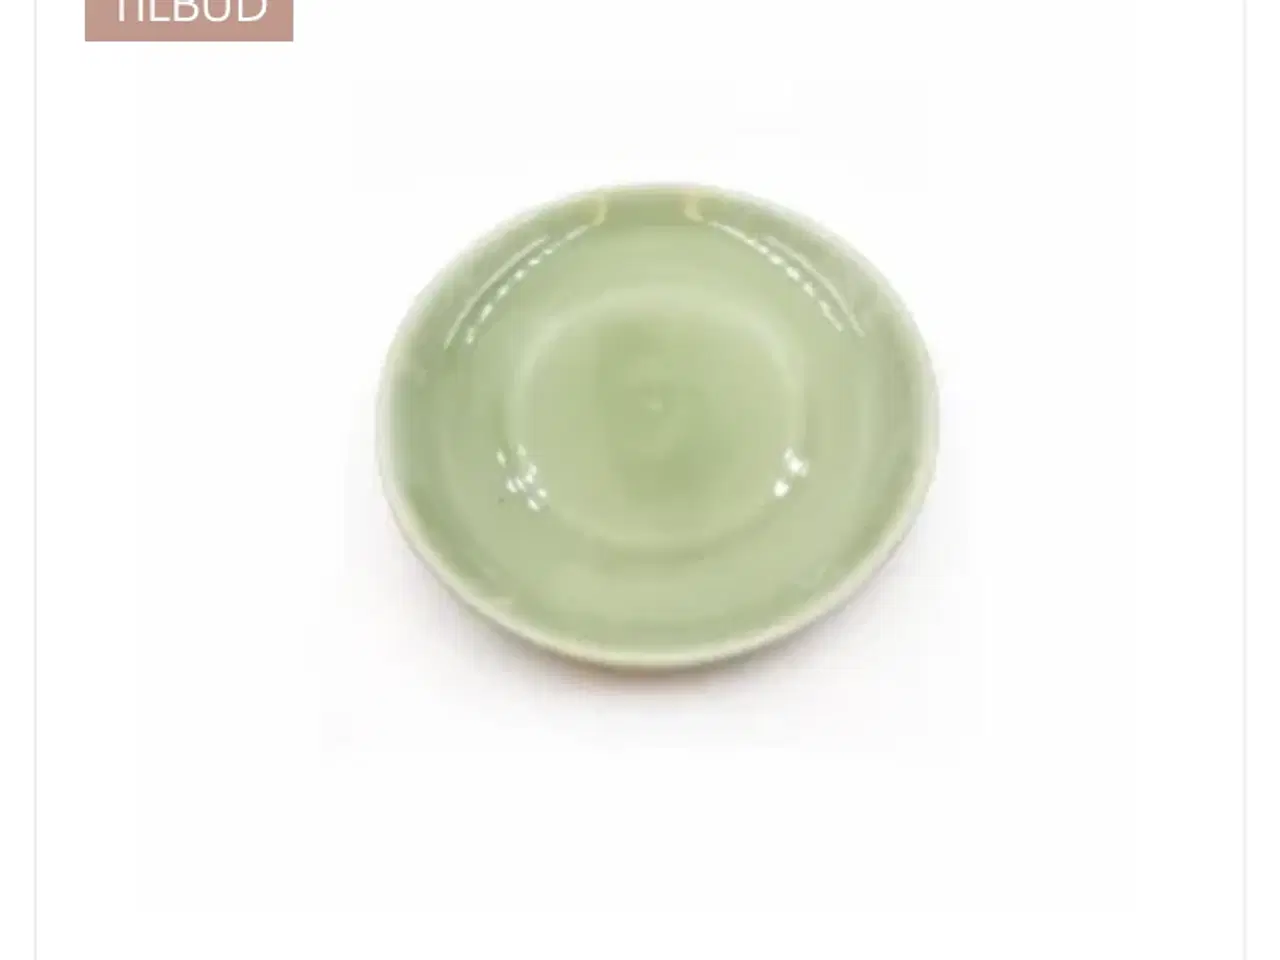 Billede 11 - Grønne tallerkener, skåle m.m.